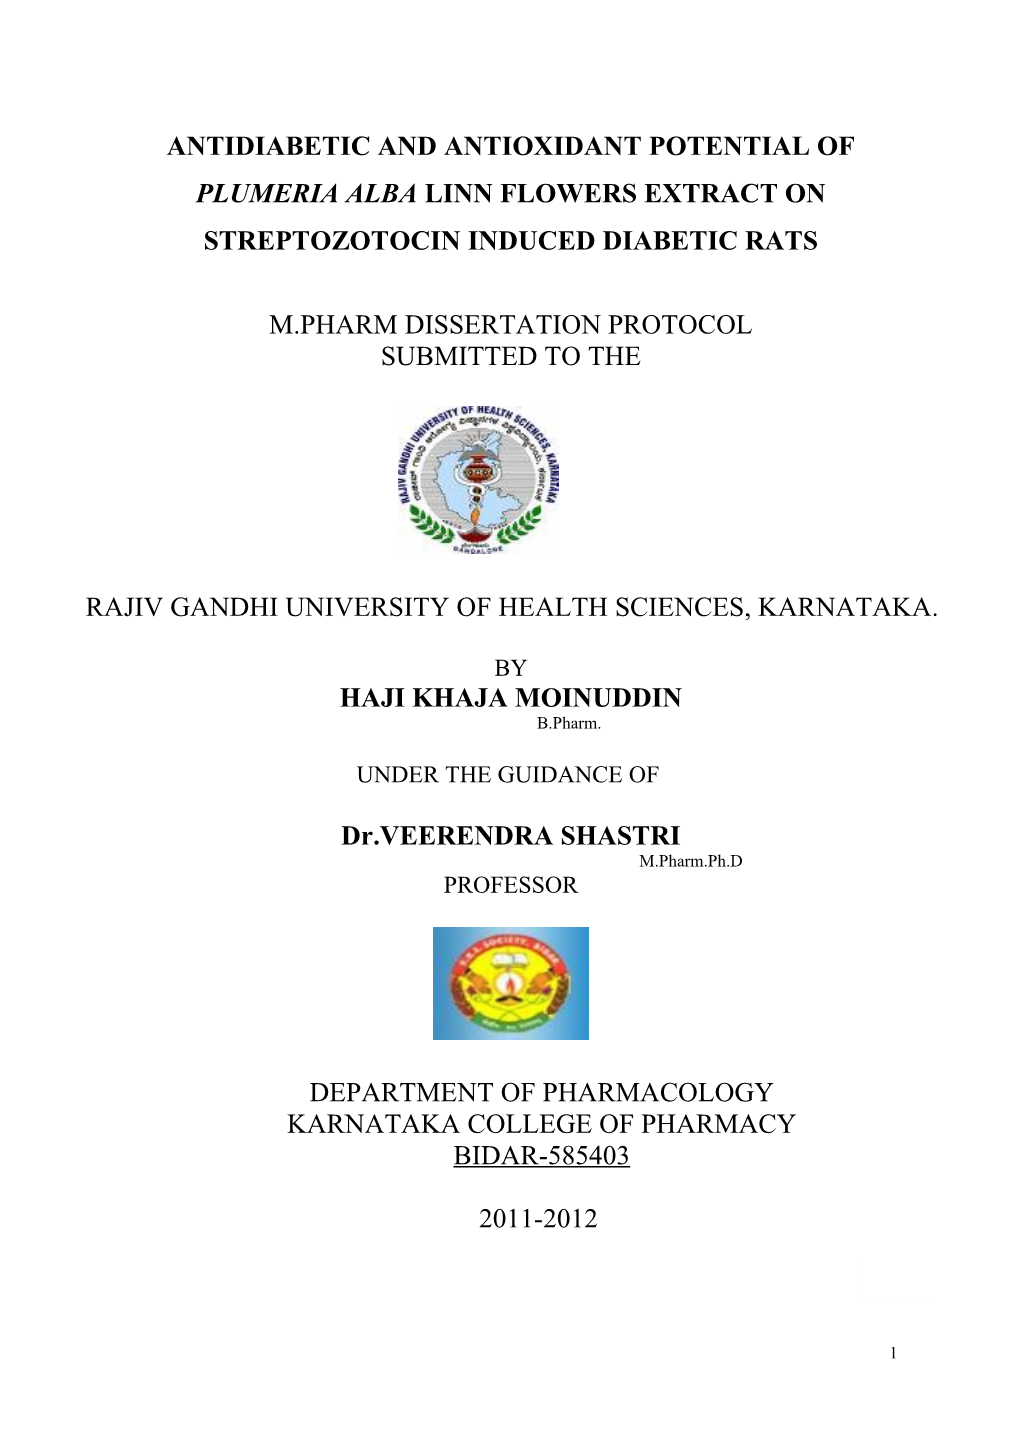 Rajiv Gandhi University of Health Sciences, Karnataka Bangalore s14